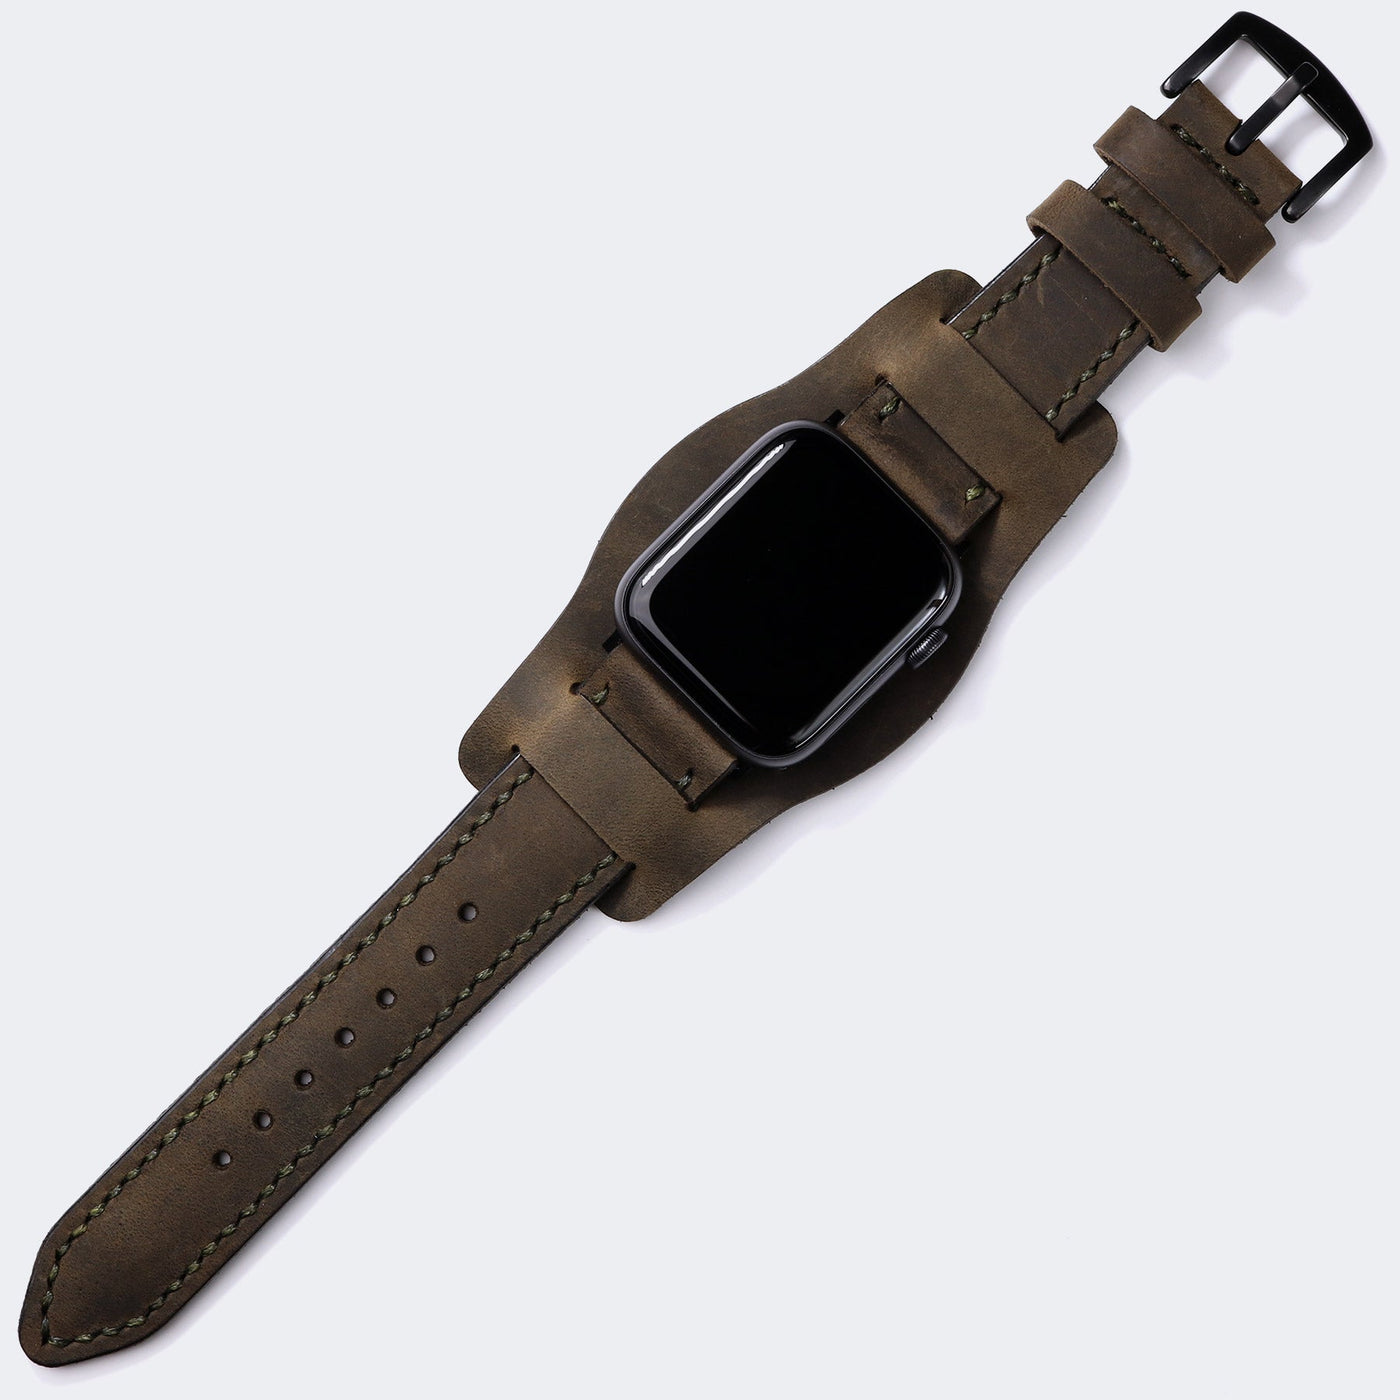 Custom Made Apple Watch Bund Strap - Olive Green